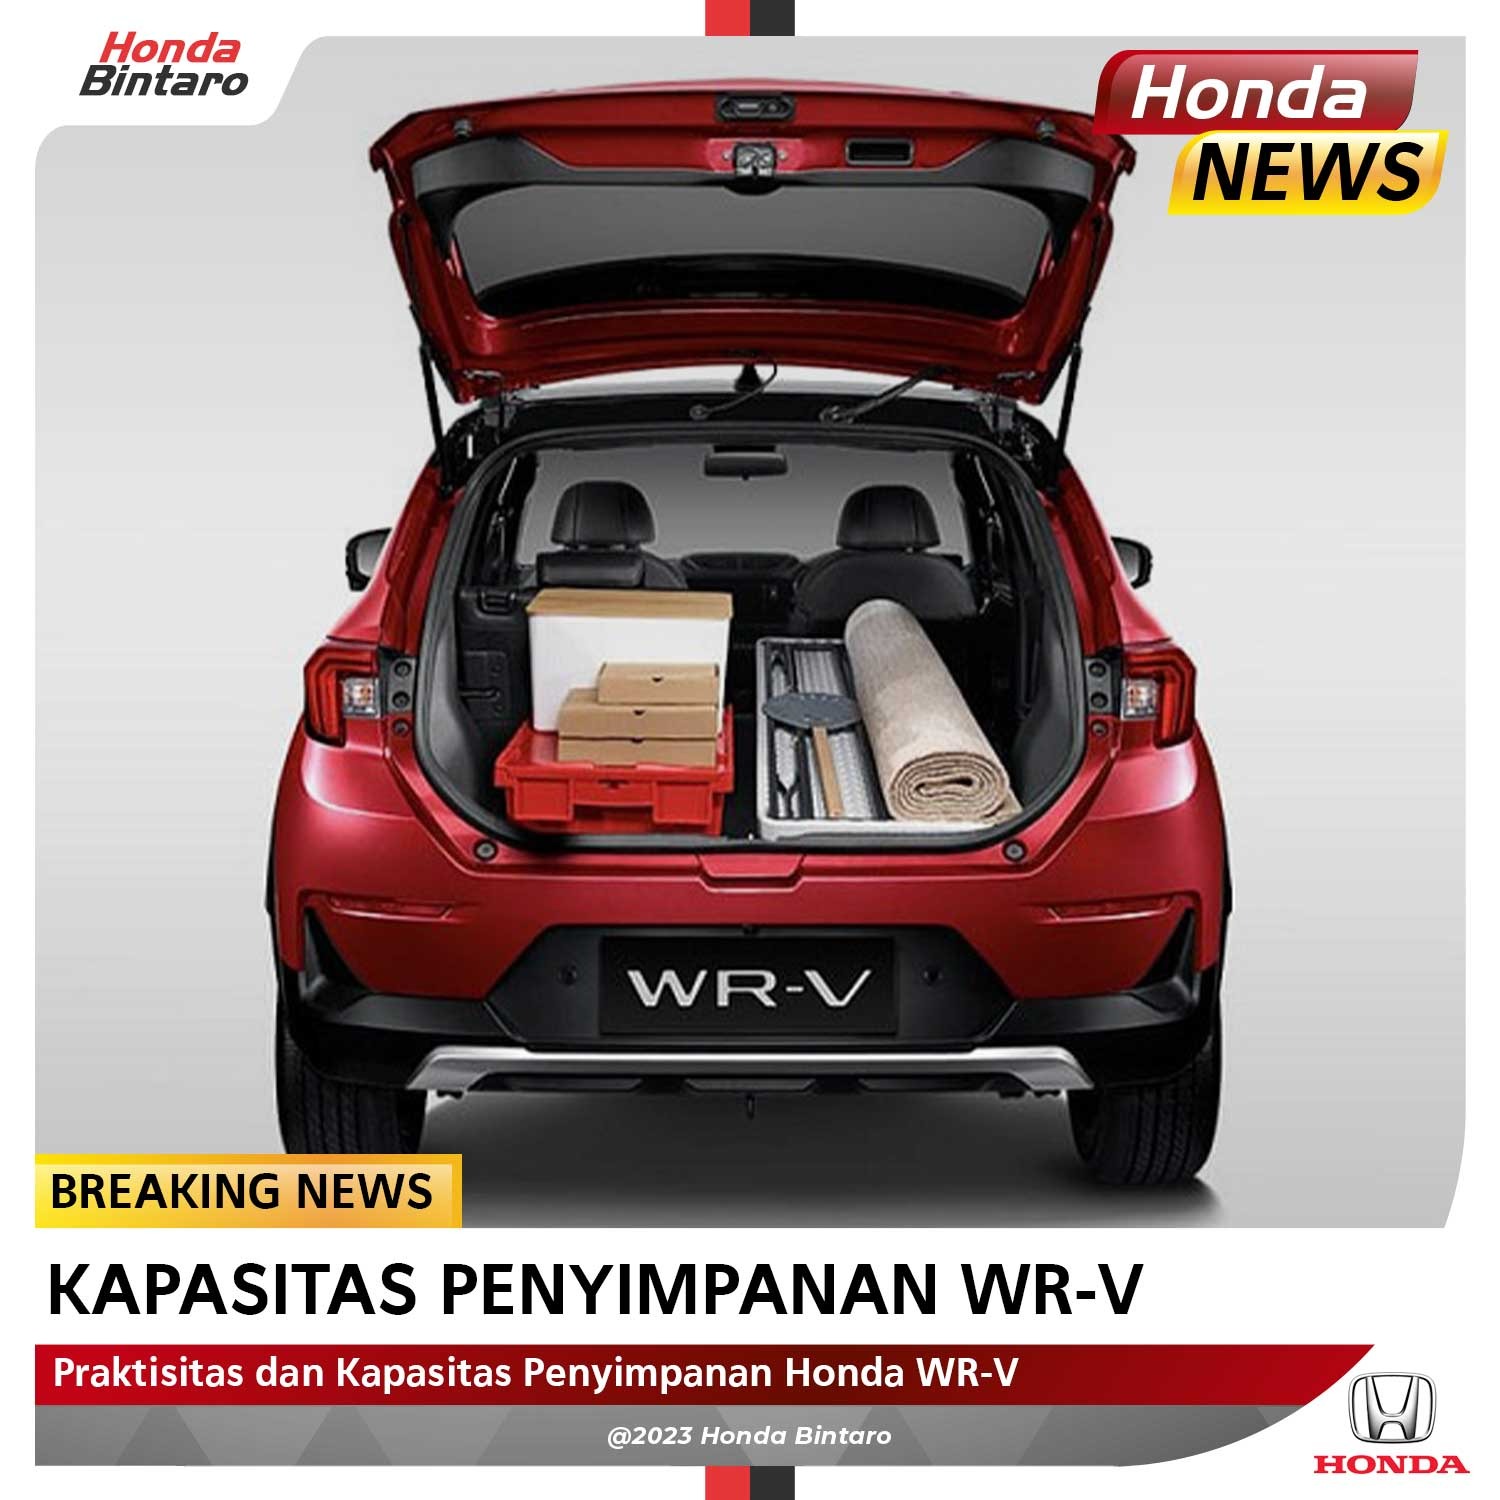 Praktisitas dan Kapasitas Penyimpanan Honda WR-V